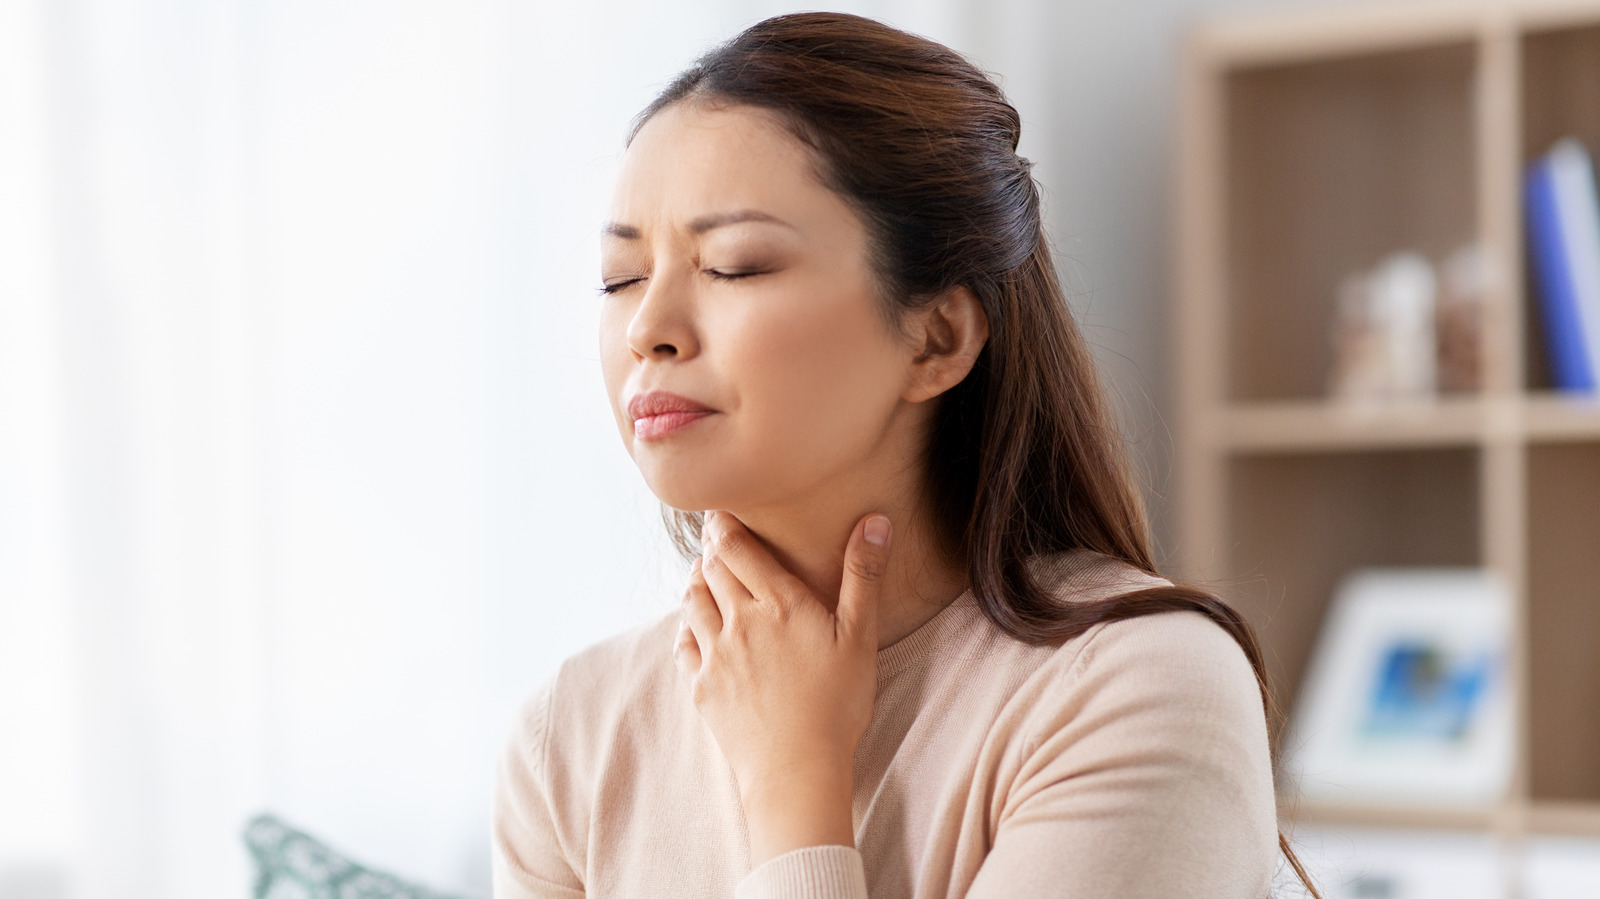 Is Sore Throat A Symptom Of COVID19?